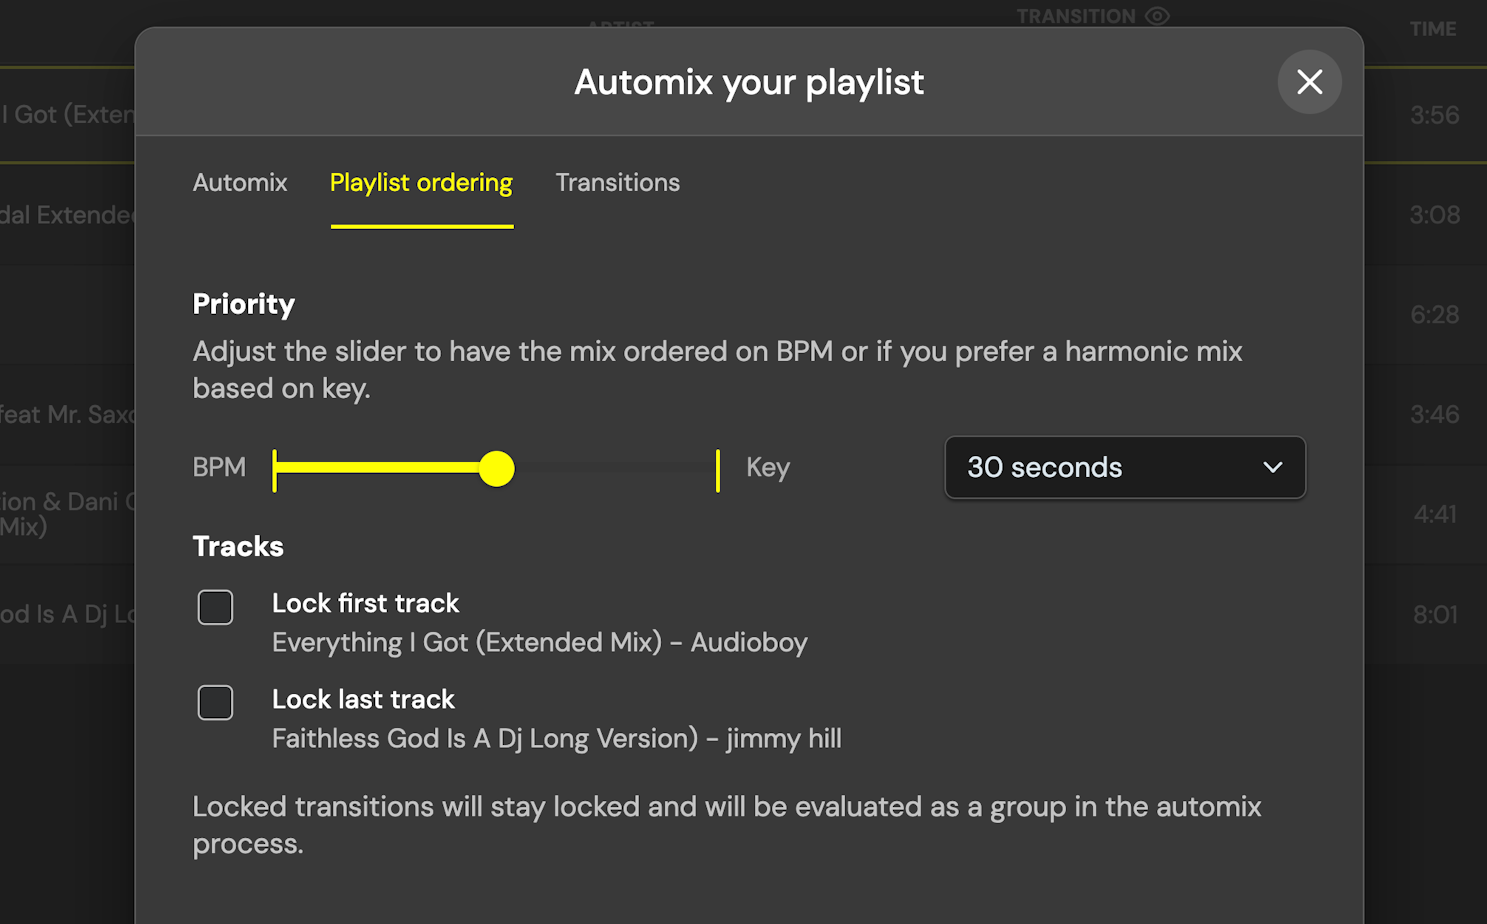 Let Automix order your playlist